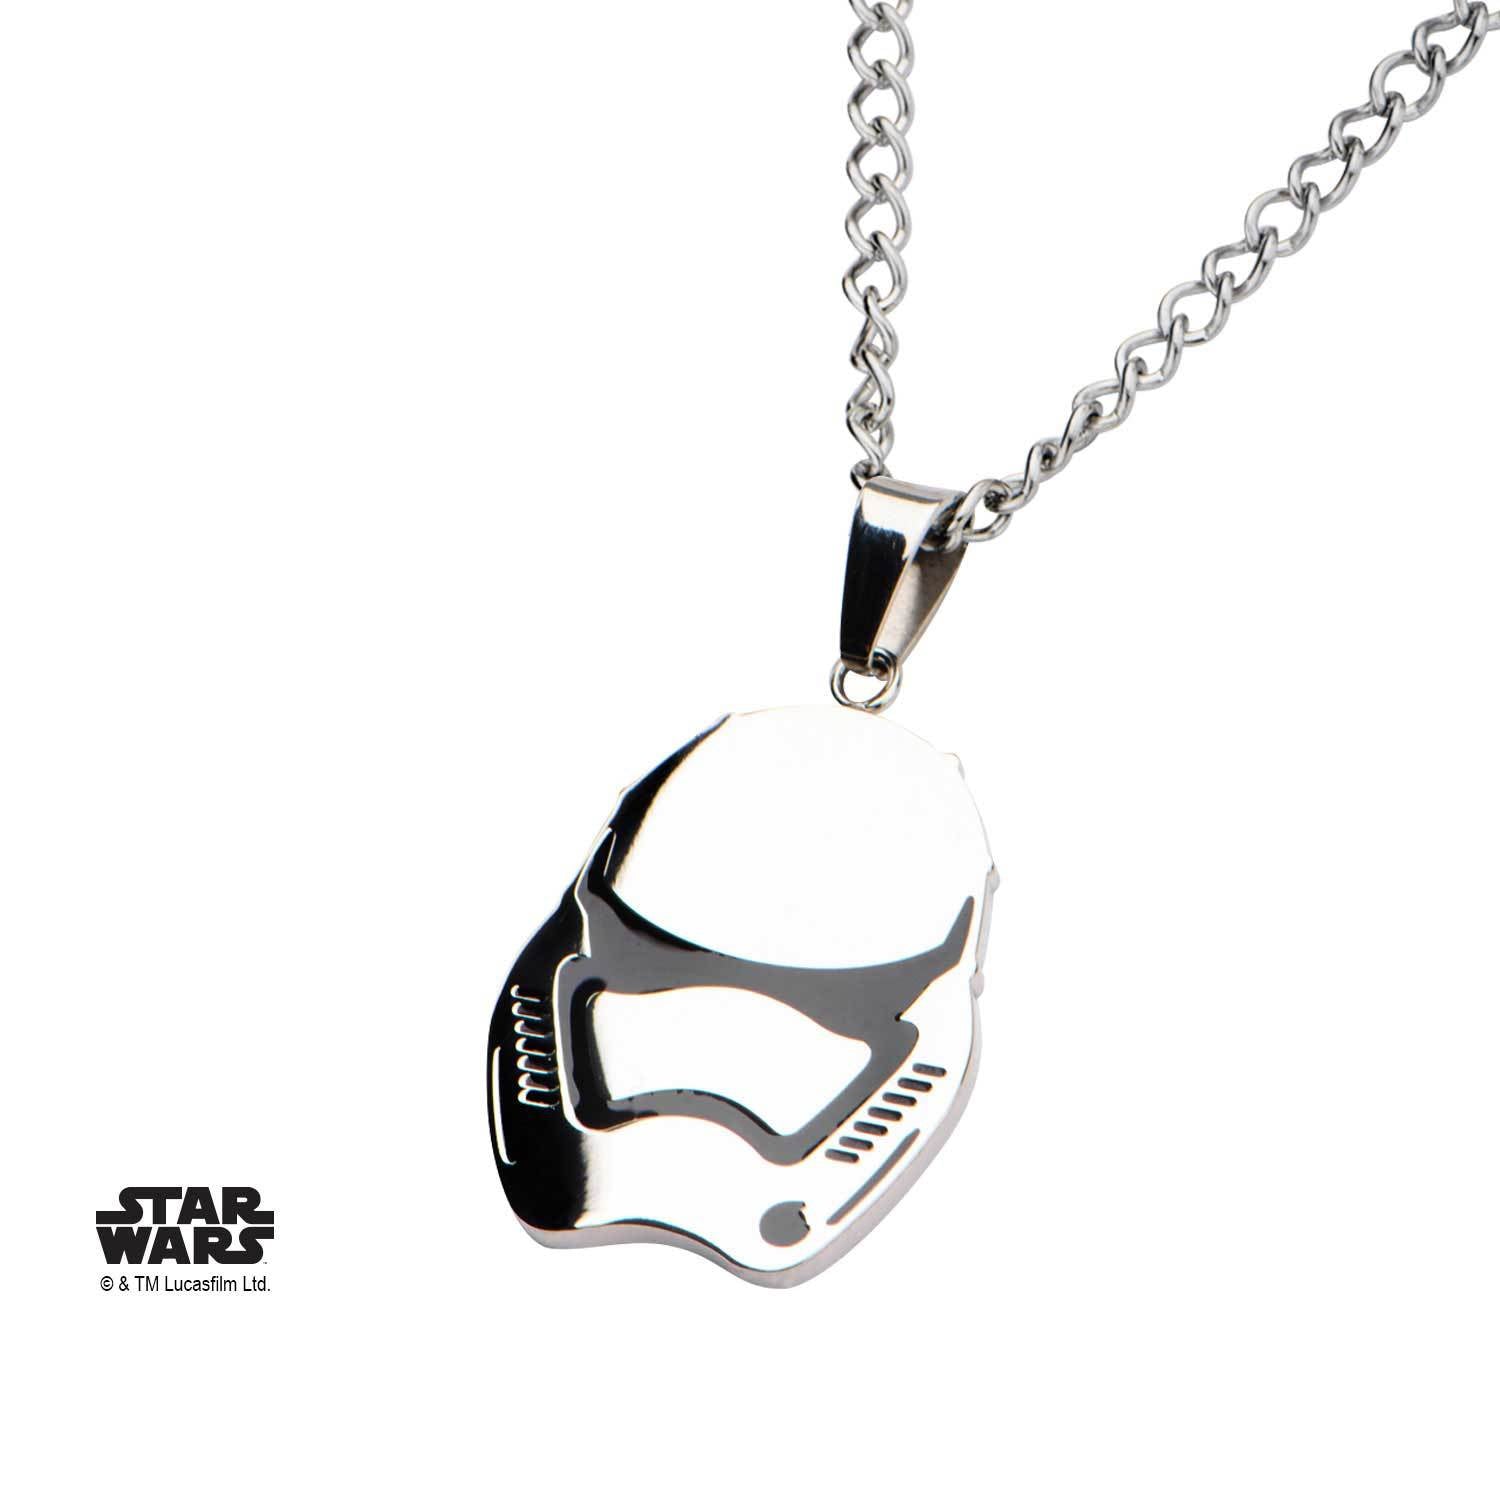 Star Wars Episode 7 Villain Trooper Pendant Necklace